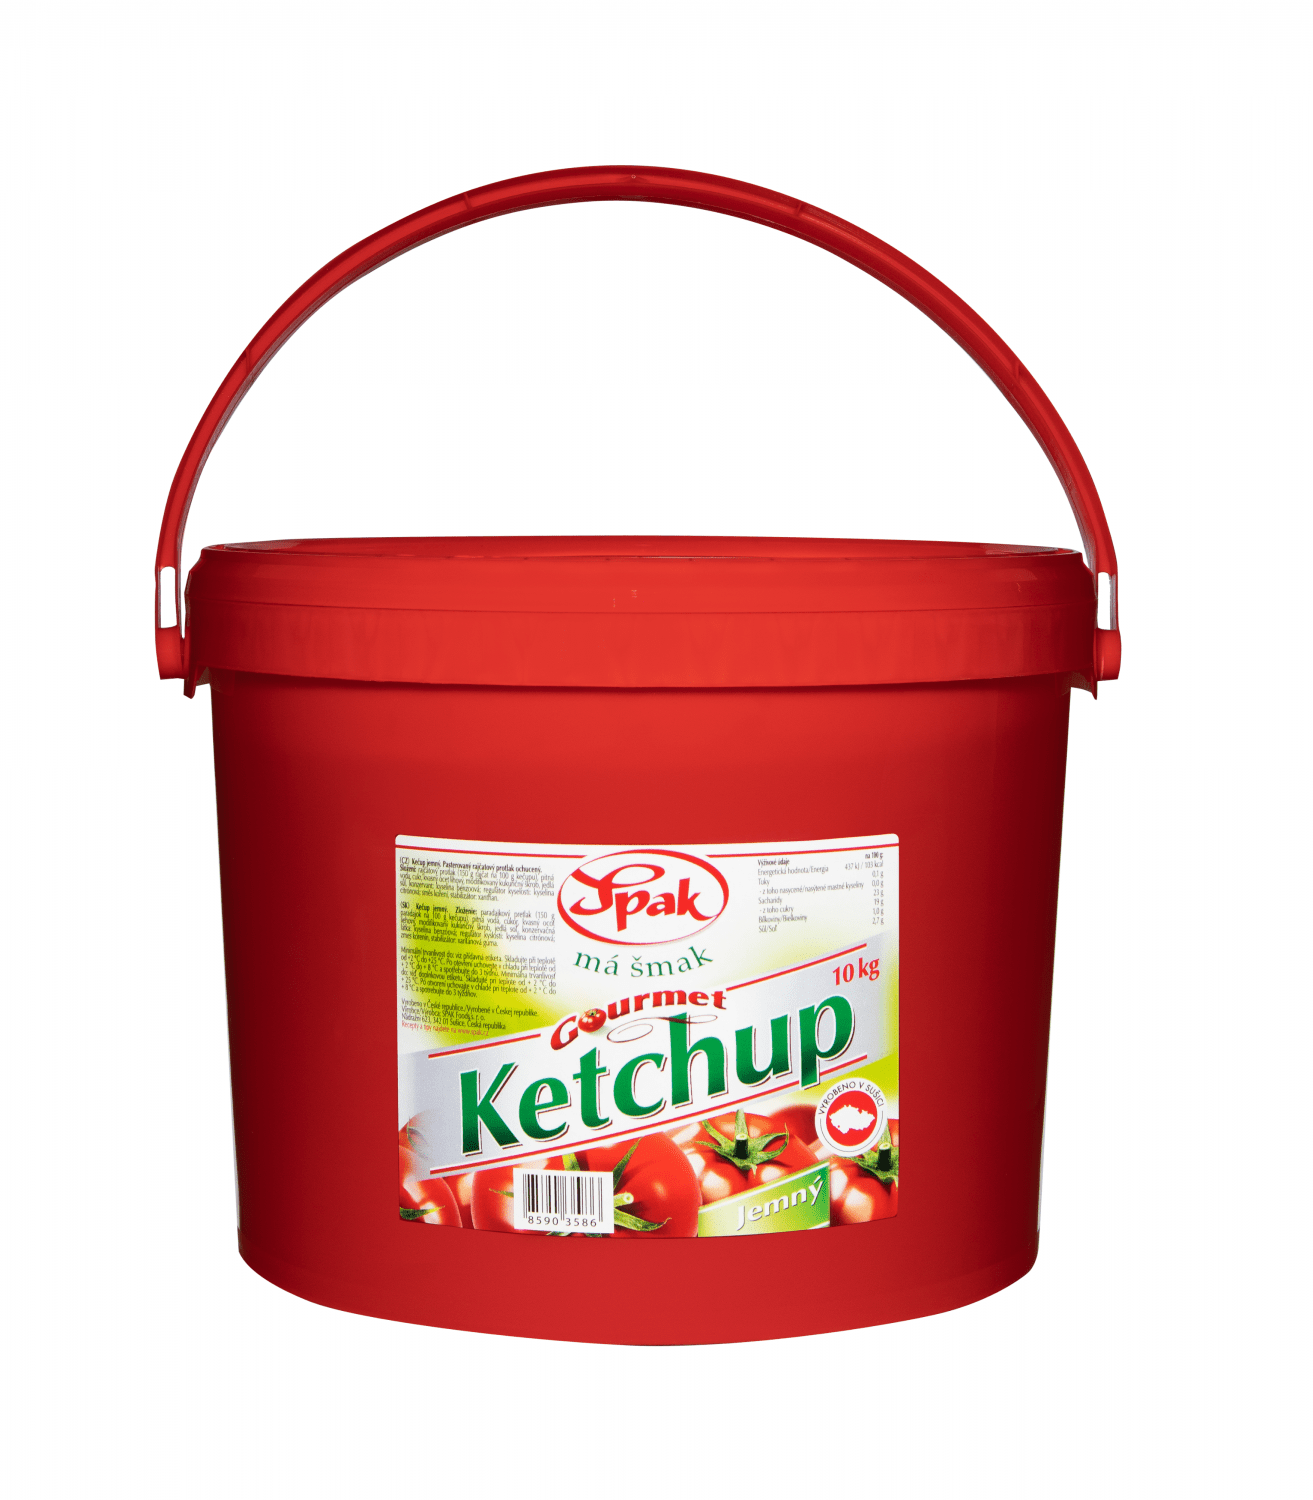 Ketchup-jemny-Gourmet-10-kg-1